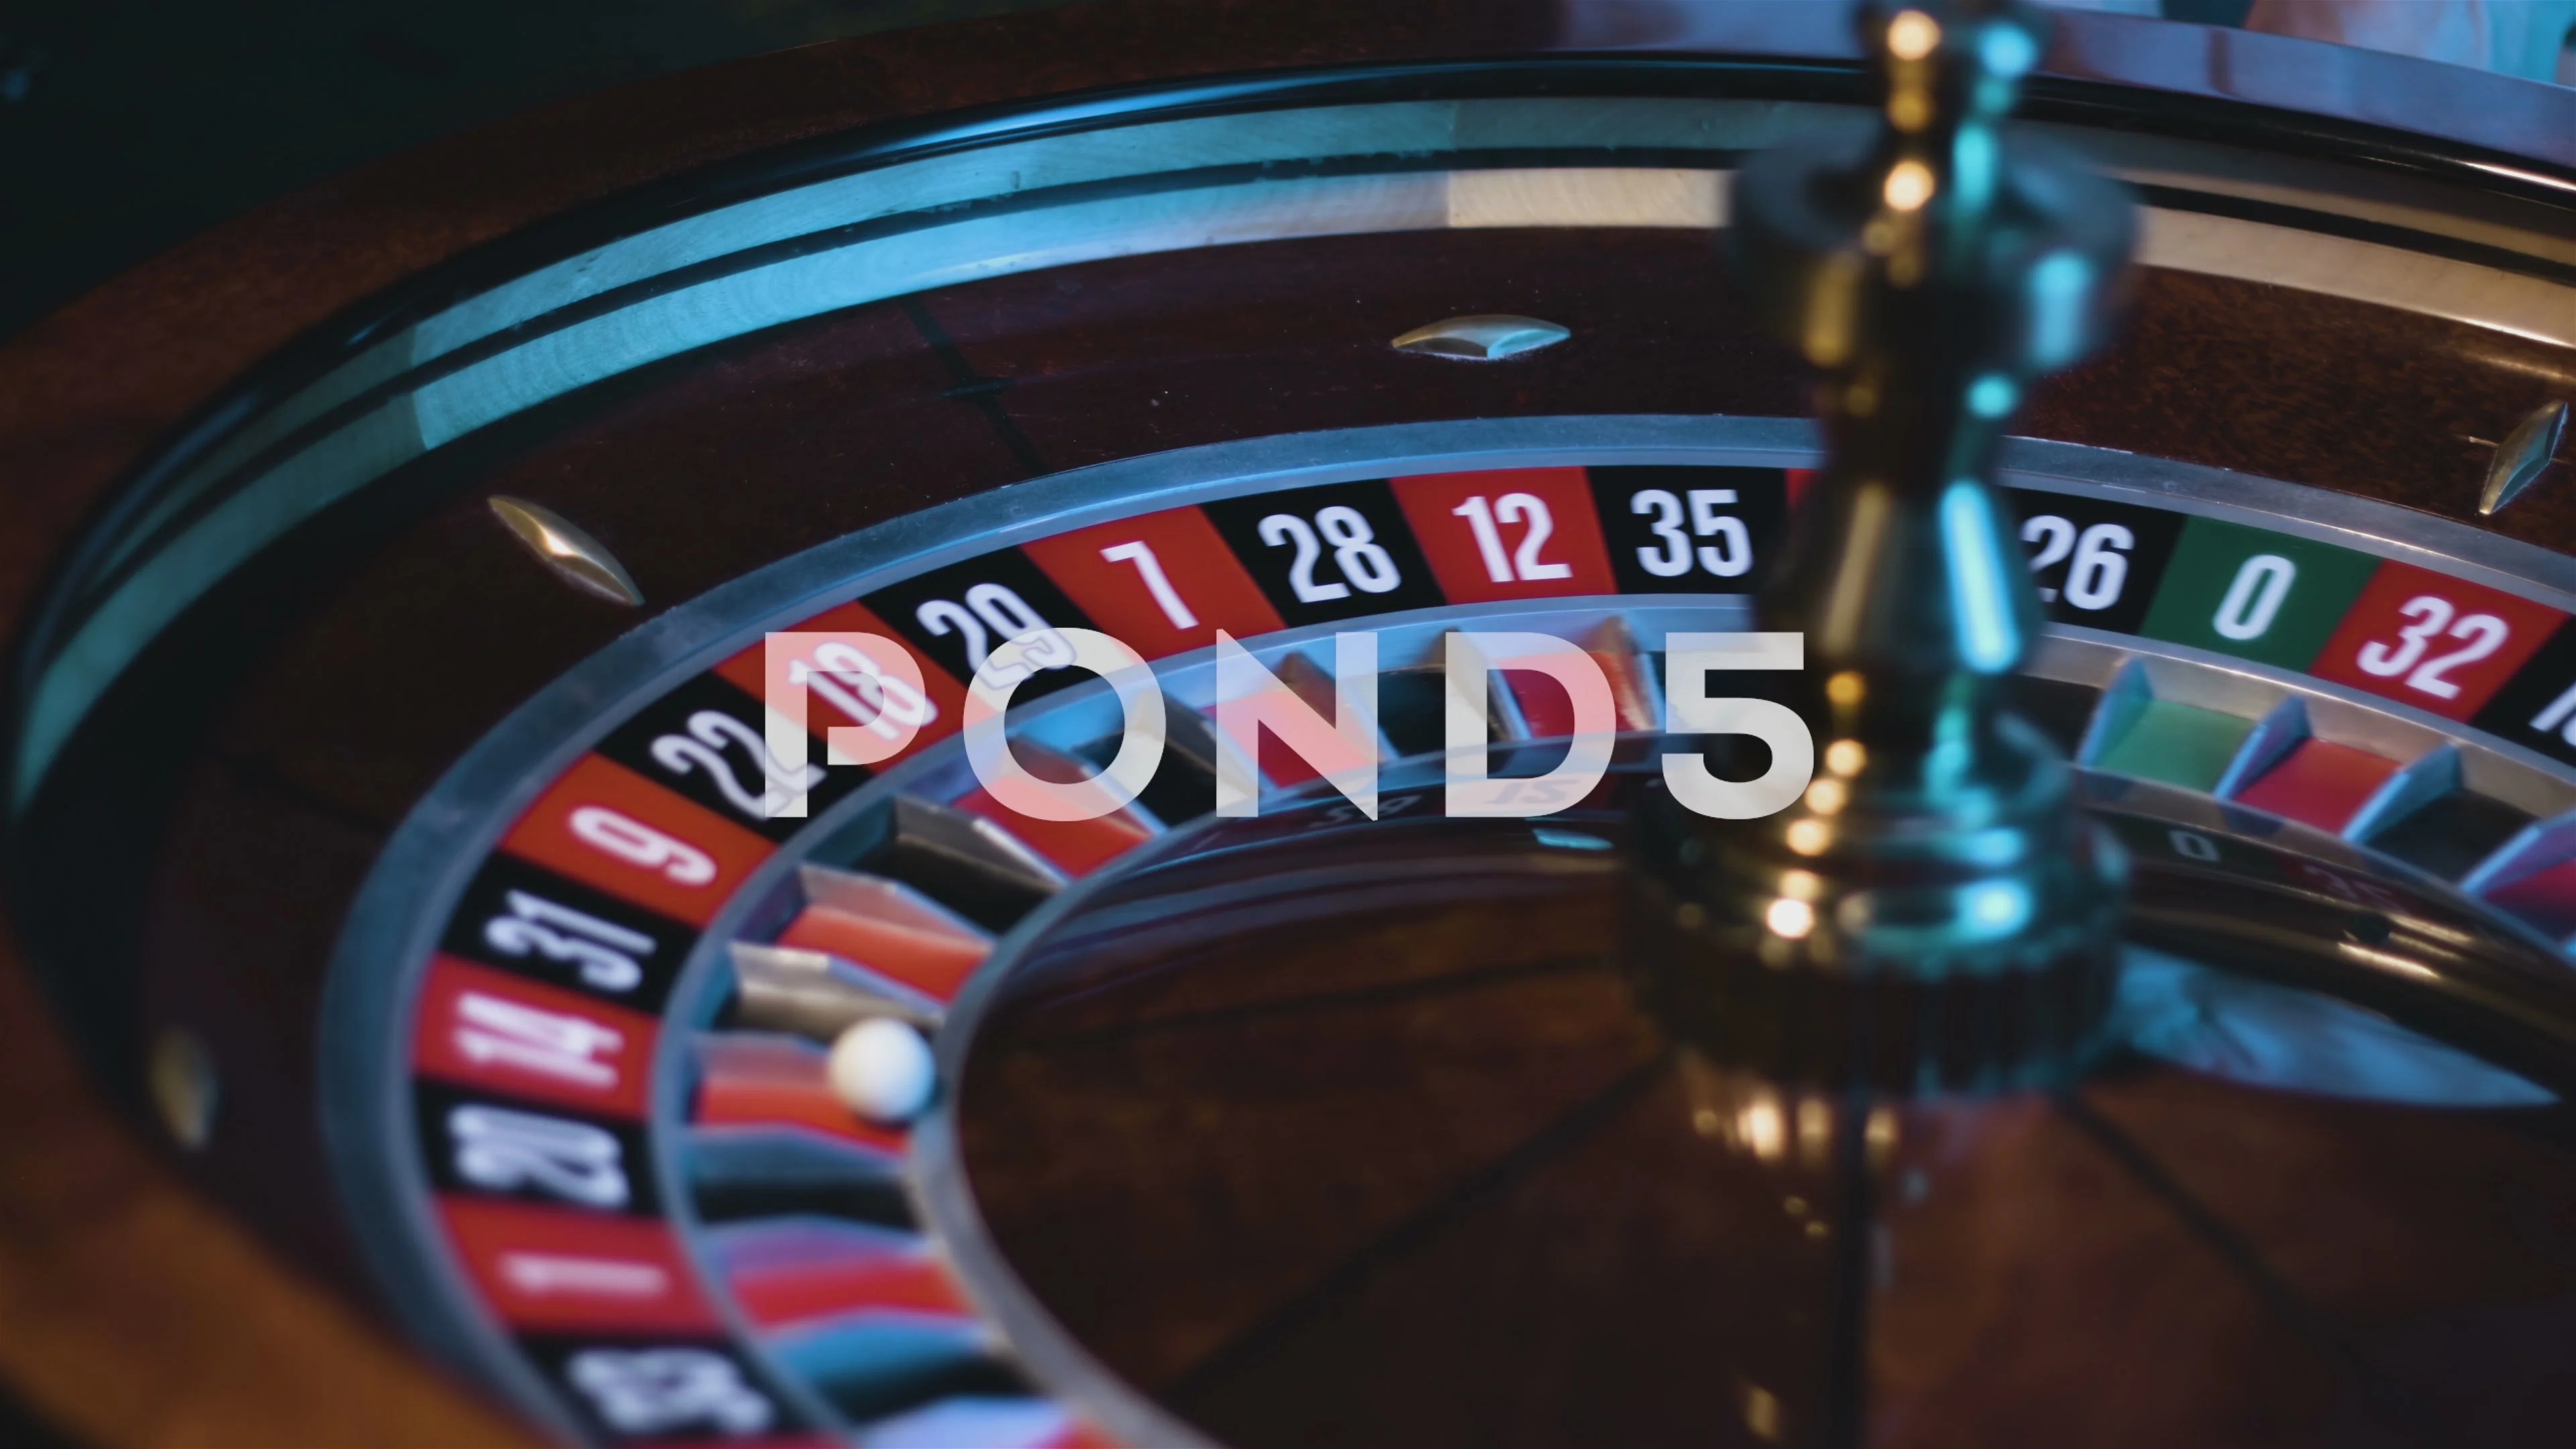 Casino Gambling Russian roulette Las Vegas, Roulette Game